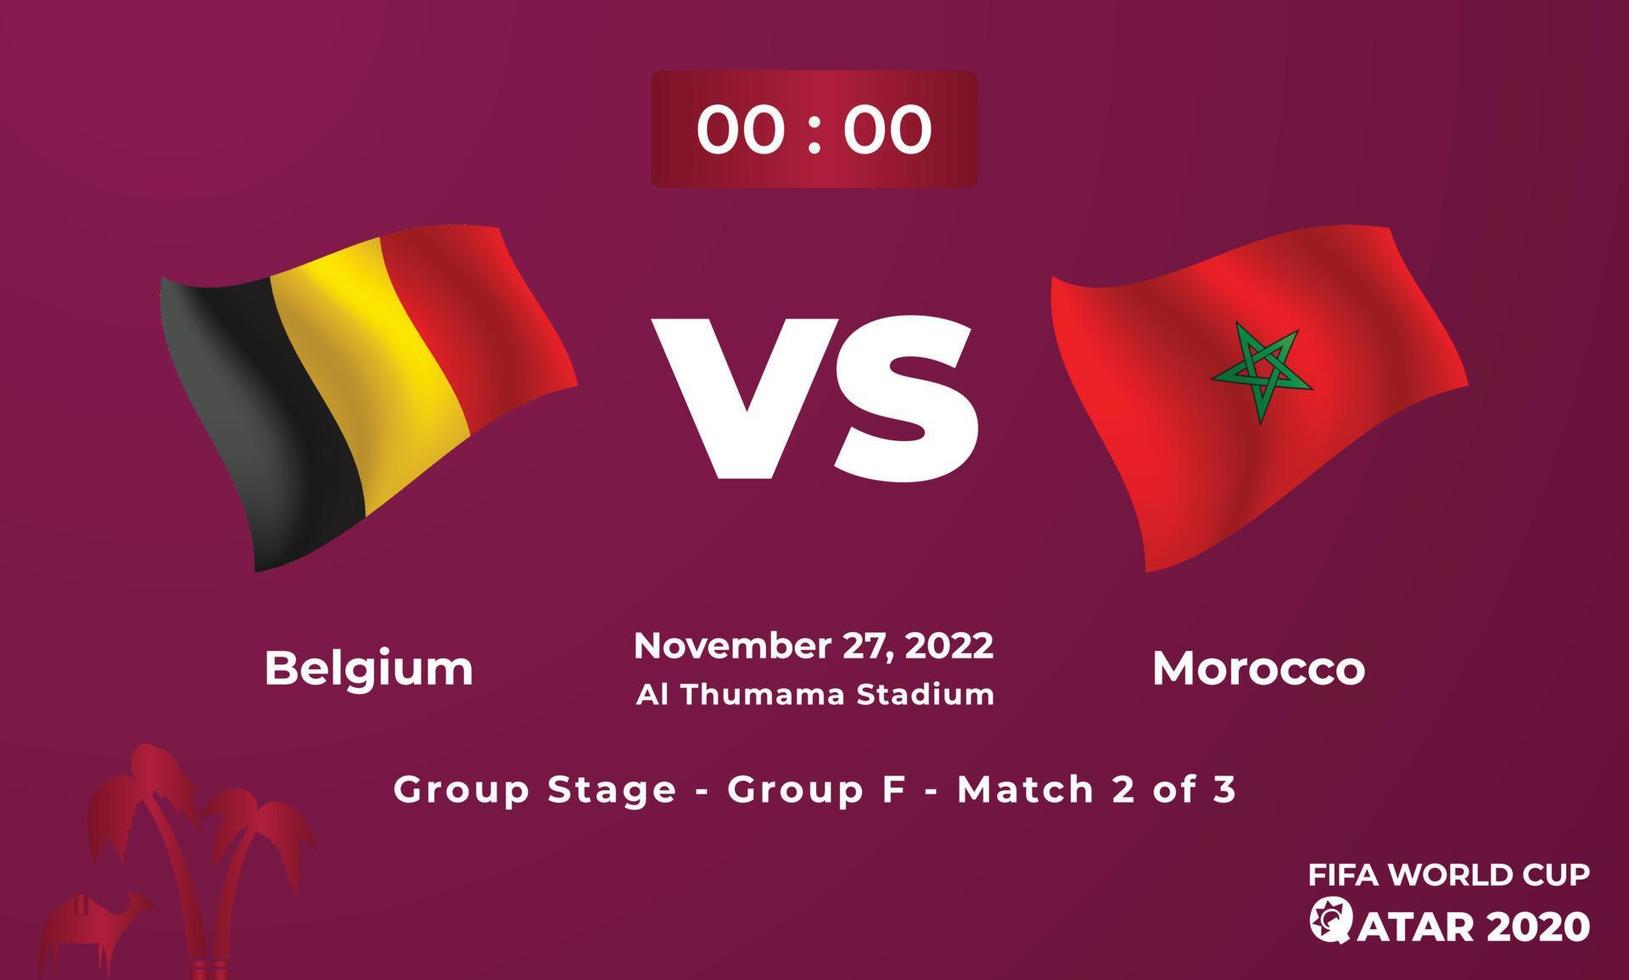 Belgium VS Morocco Football MatchTemplate, FIFA World Cup in Qatar 2022 vector